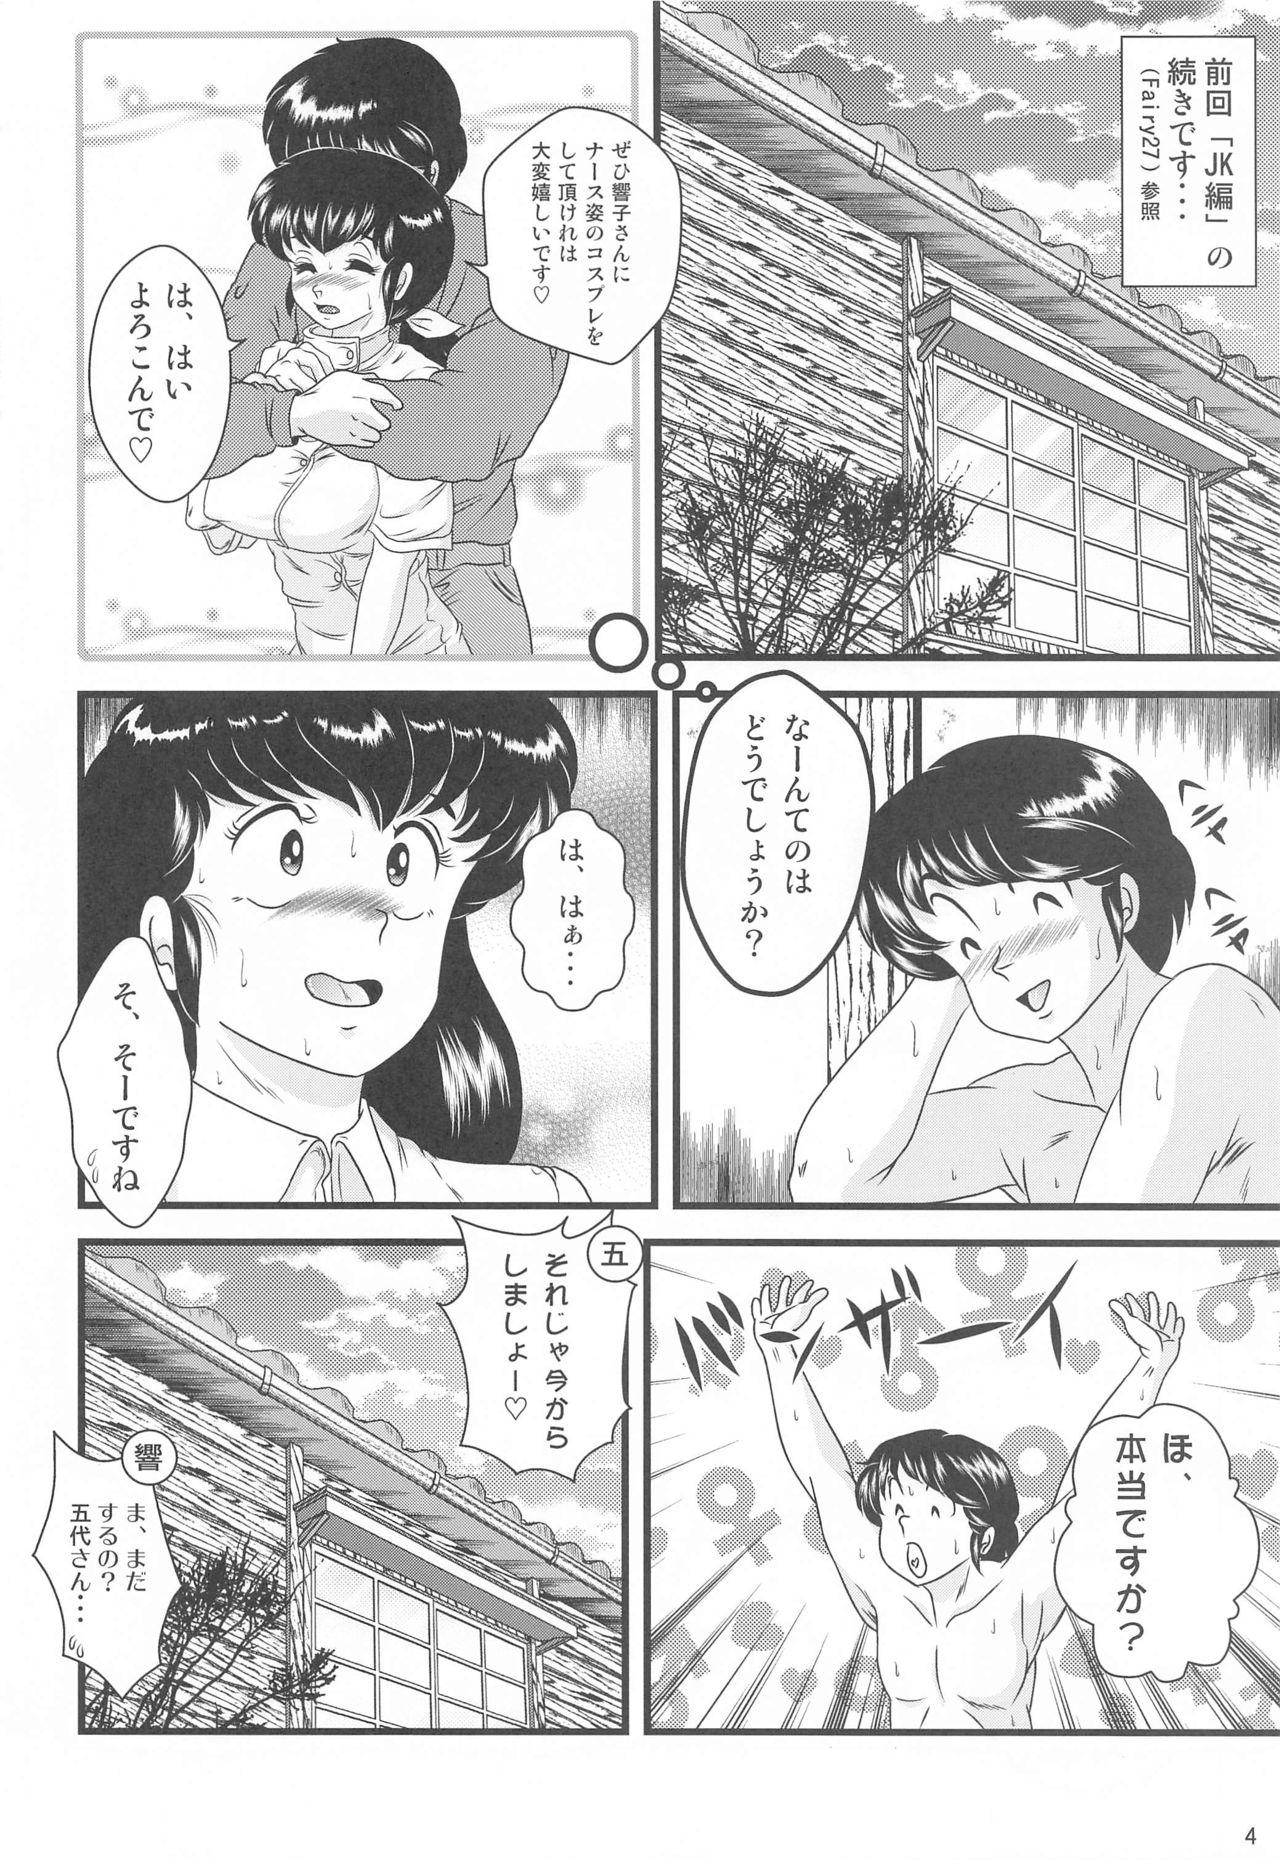 Puto Fairy 28 - Maison ikkoku Pawg - Page 3